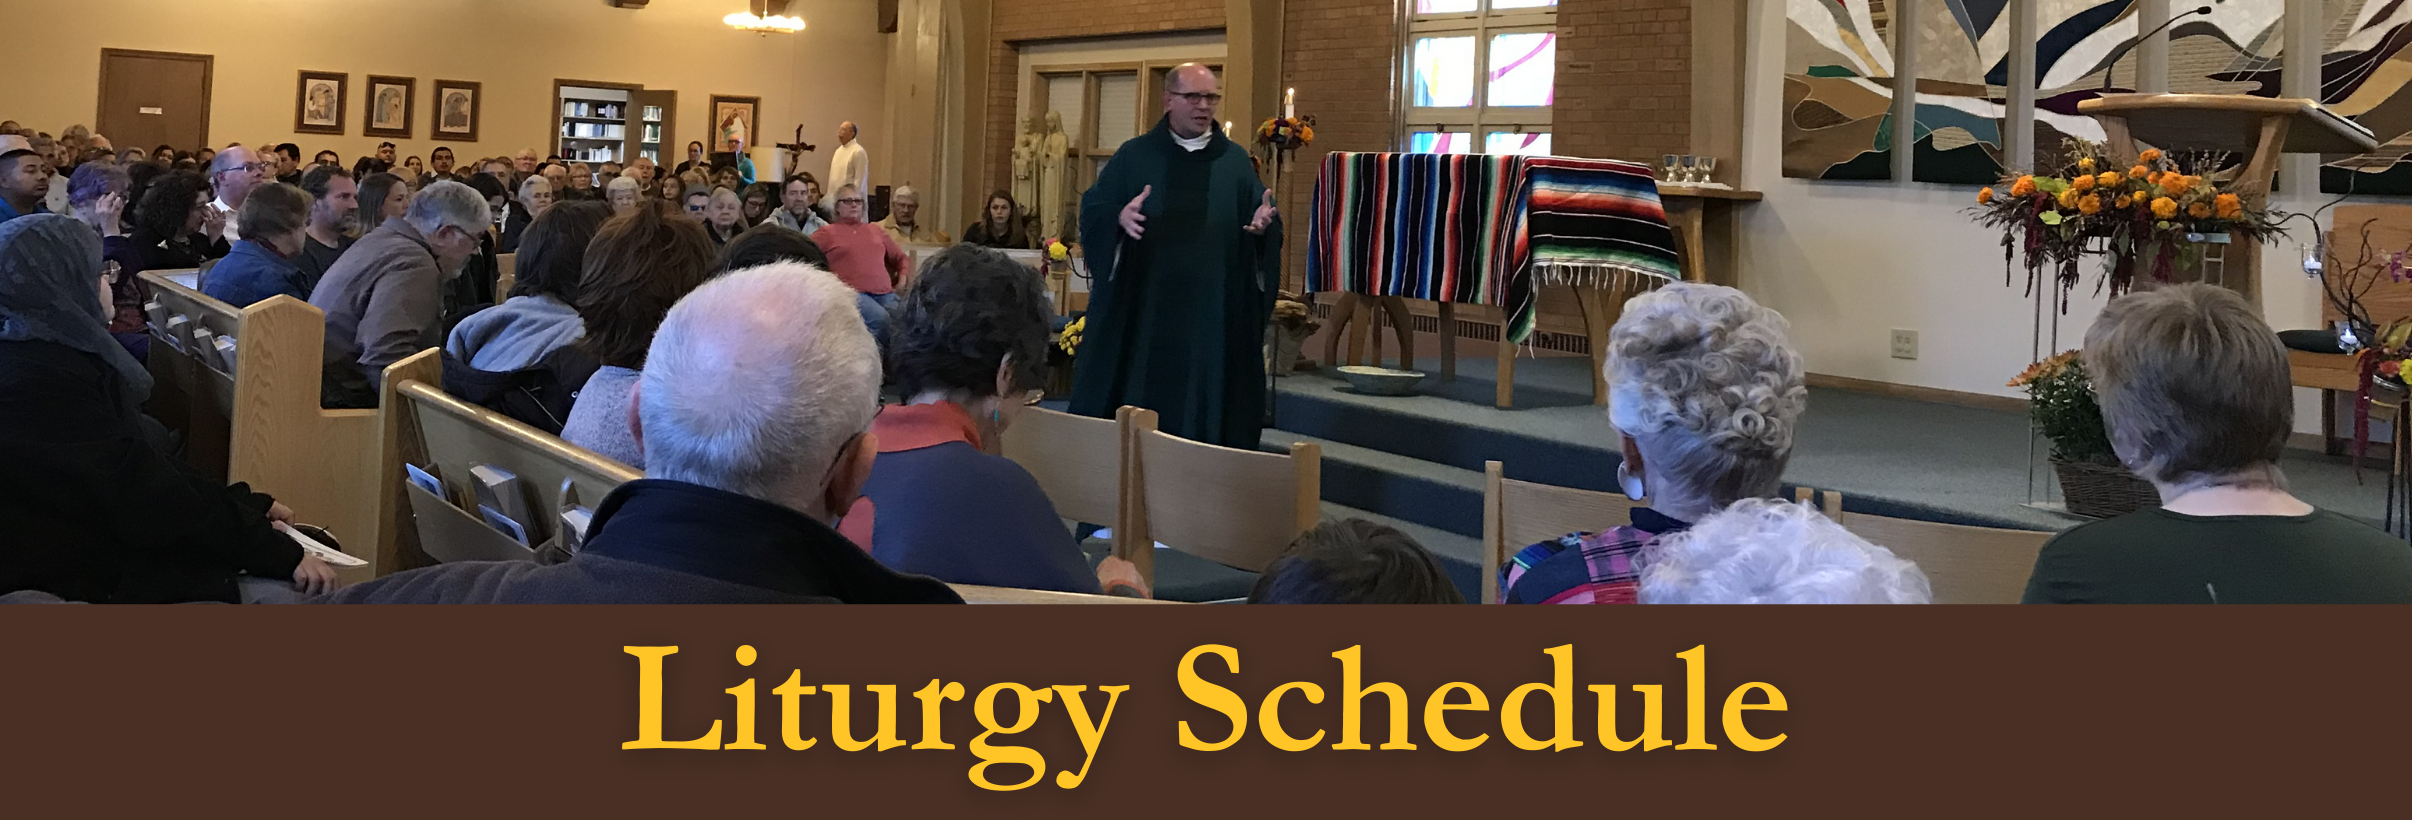 Liturgy Schedule